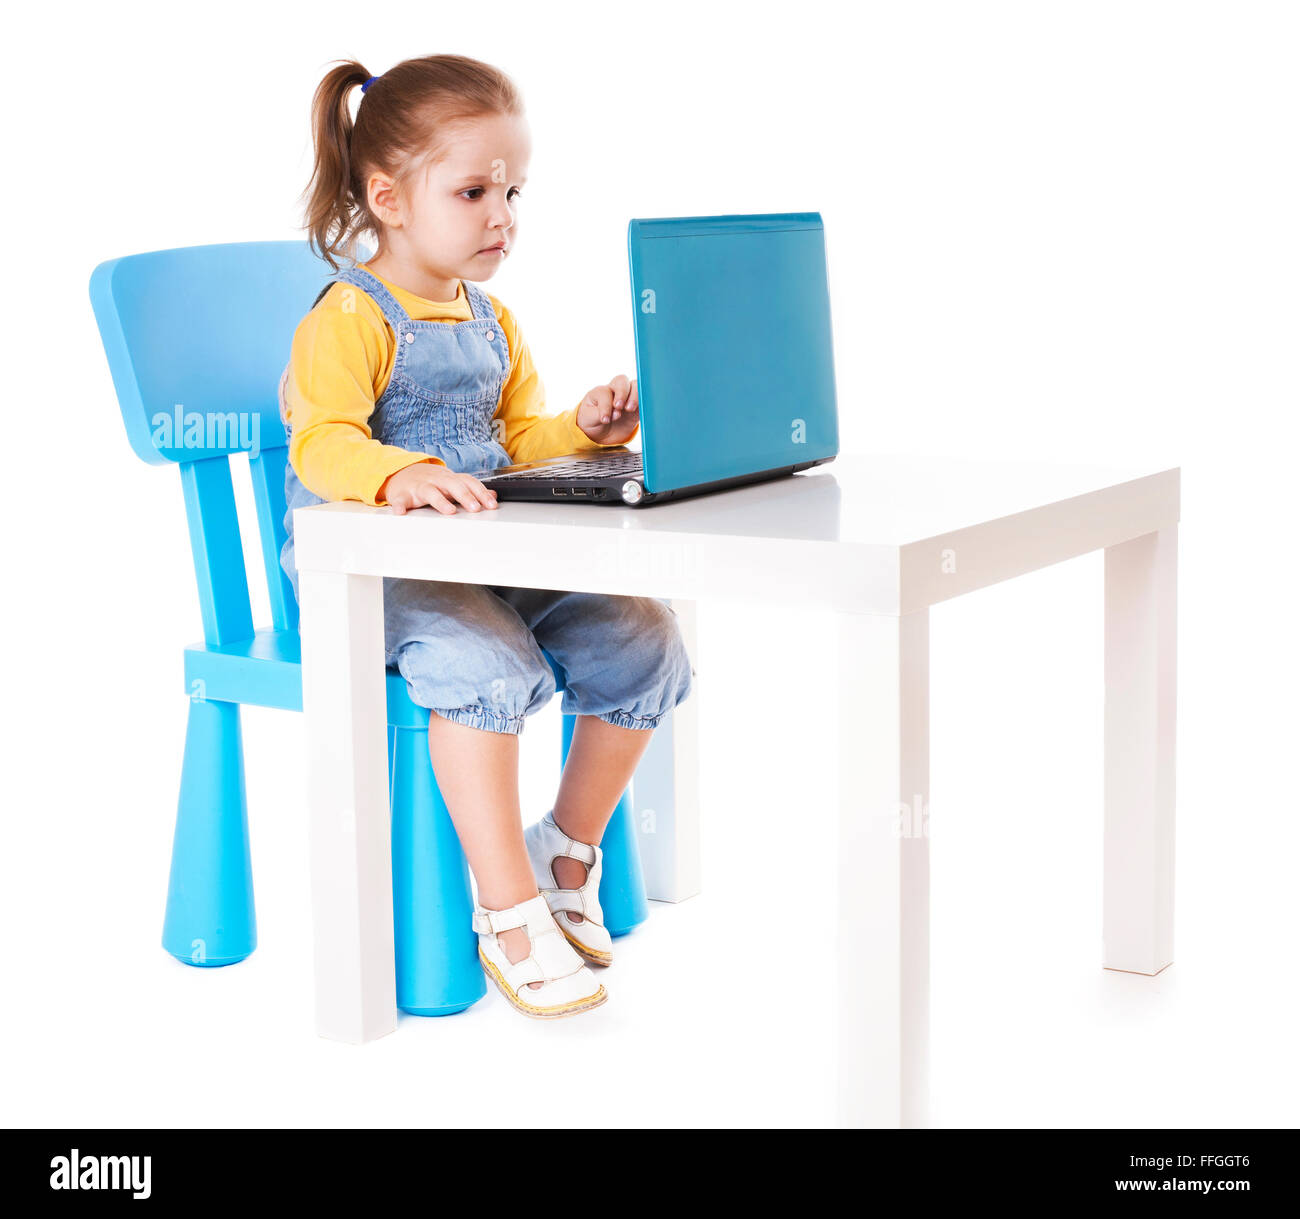 Kleines Mädchen mit Laptop - isoliert - Stock Bild Stockfoto